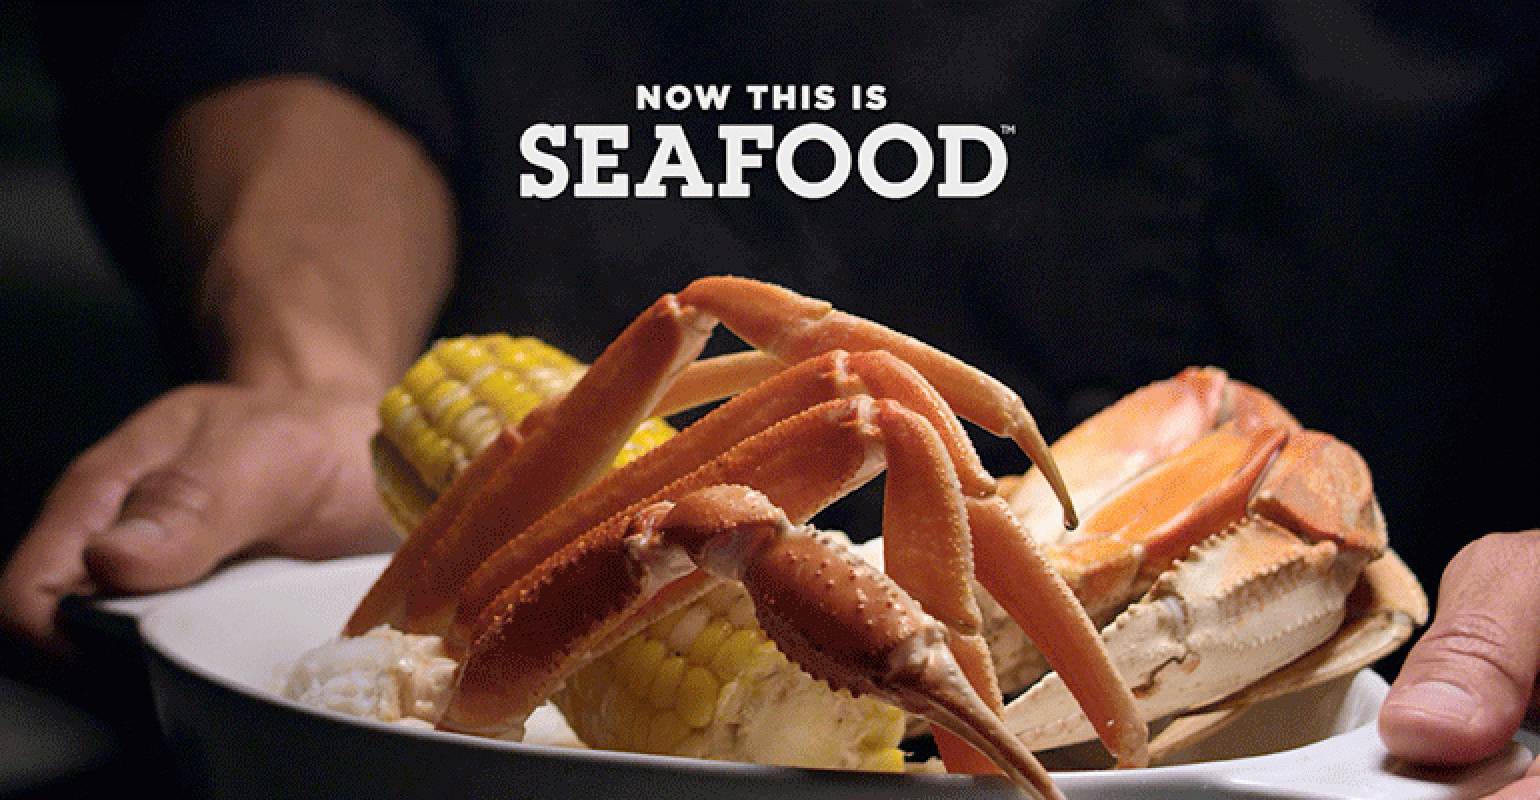 Crabfest ads signal new Red Lobster focus Nation's Restaurant News